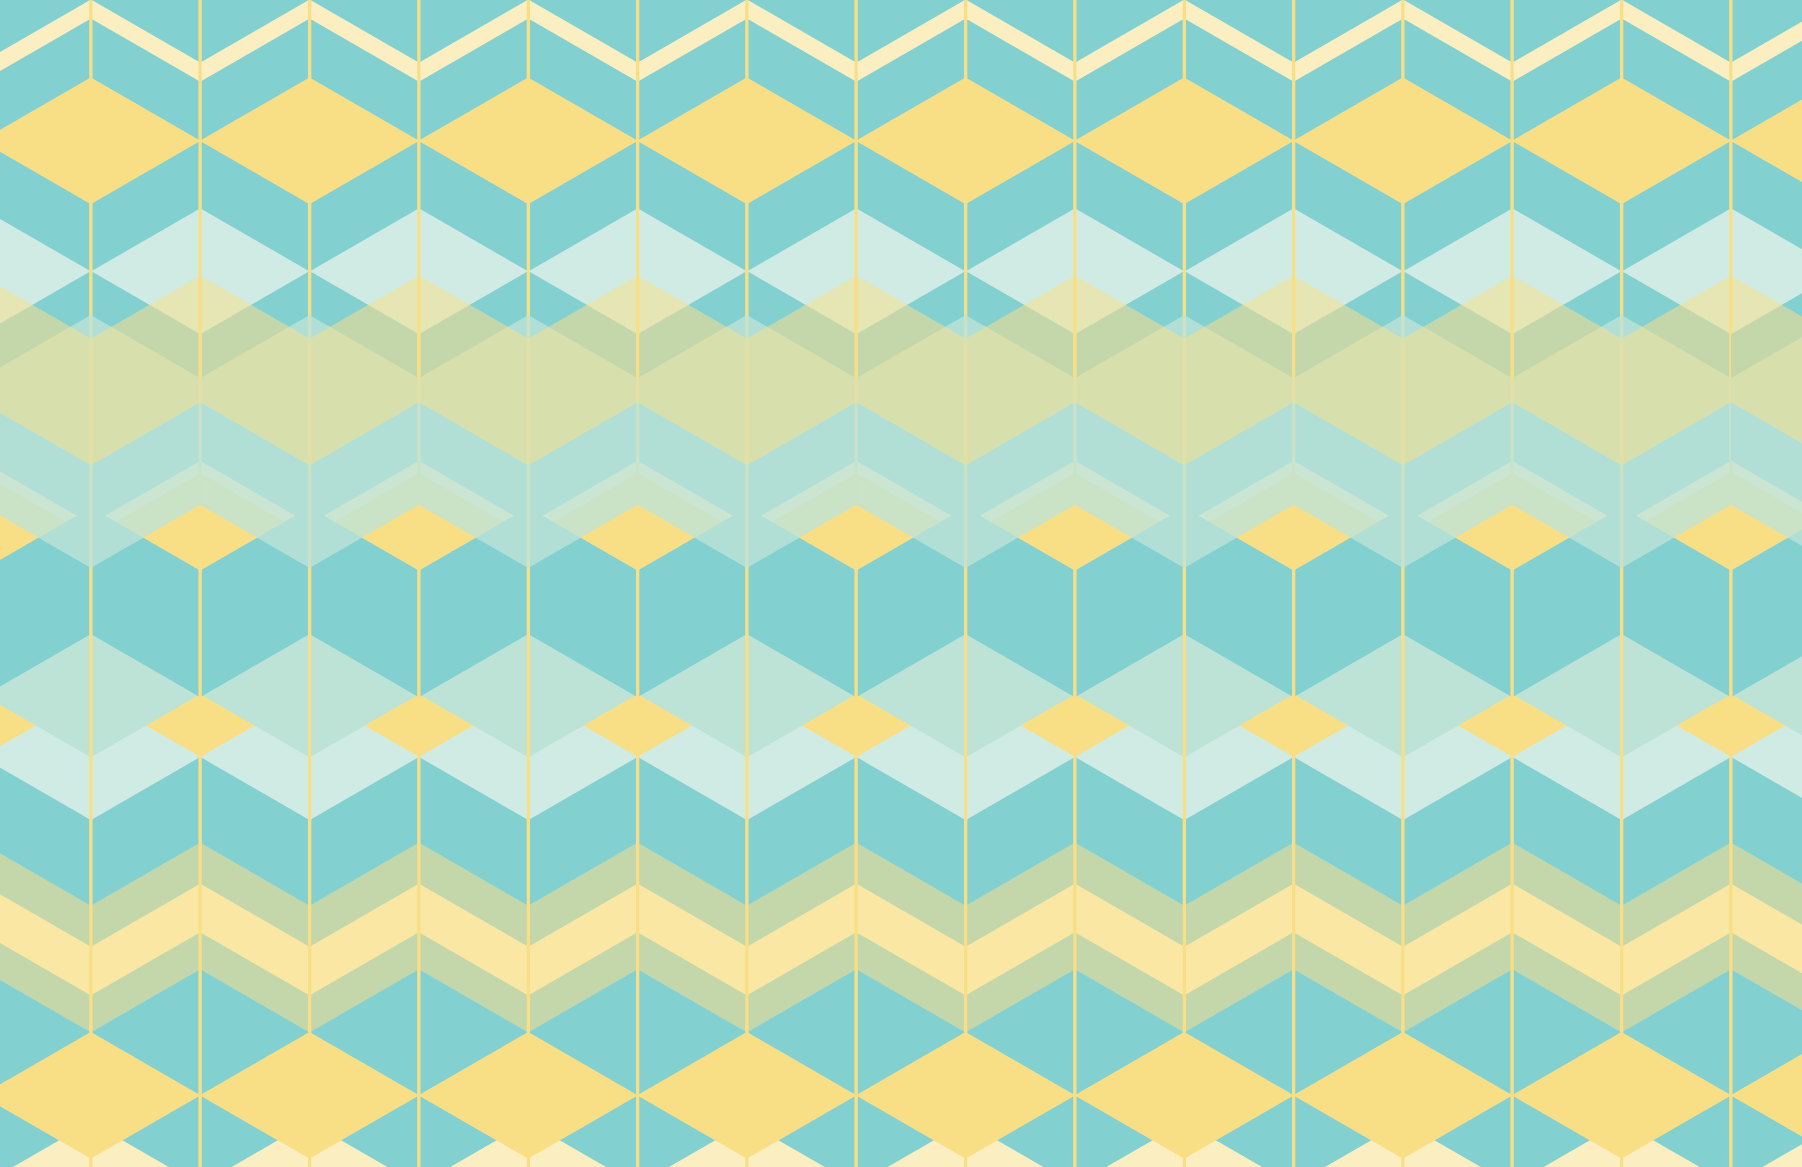 Soft rhombus pattern